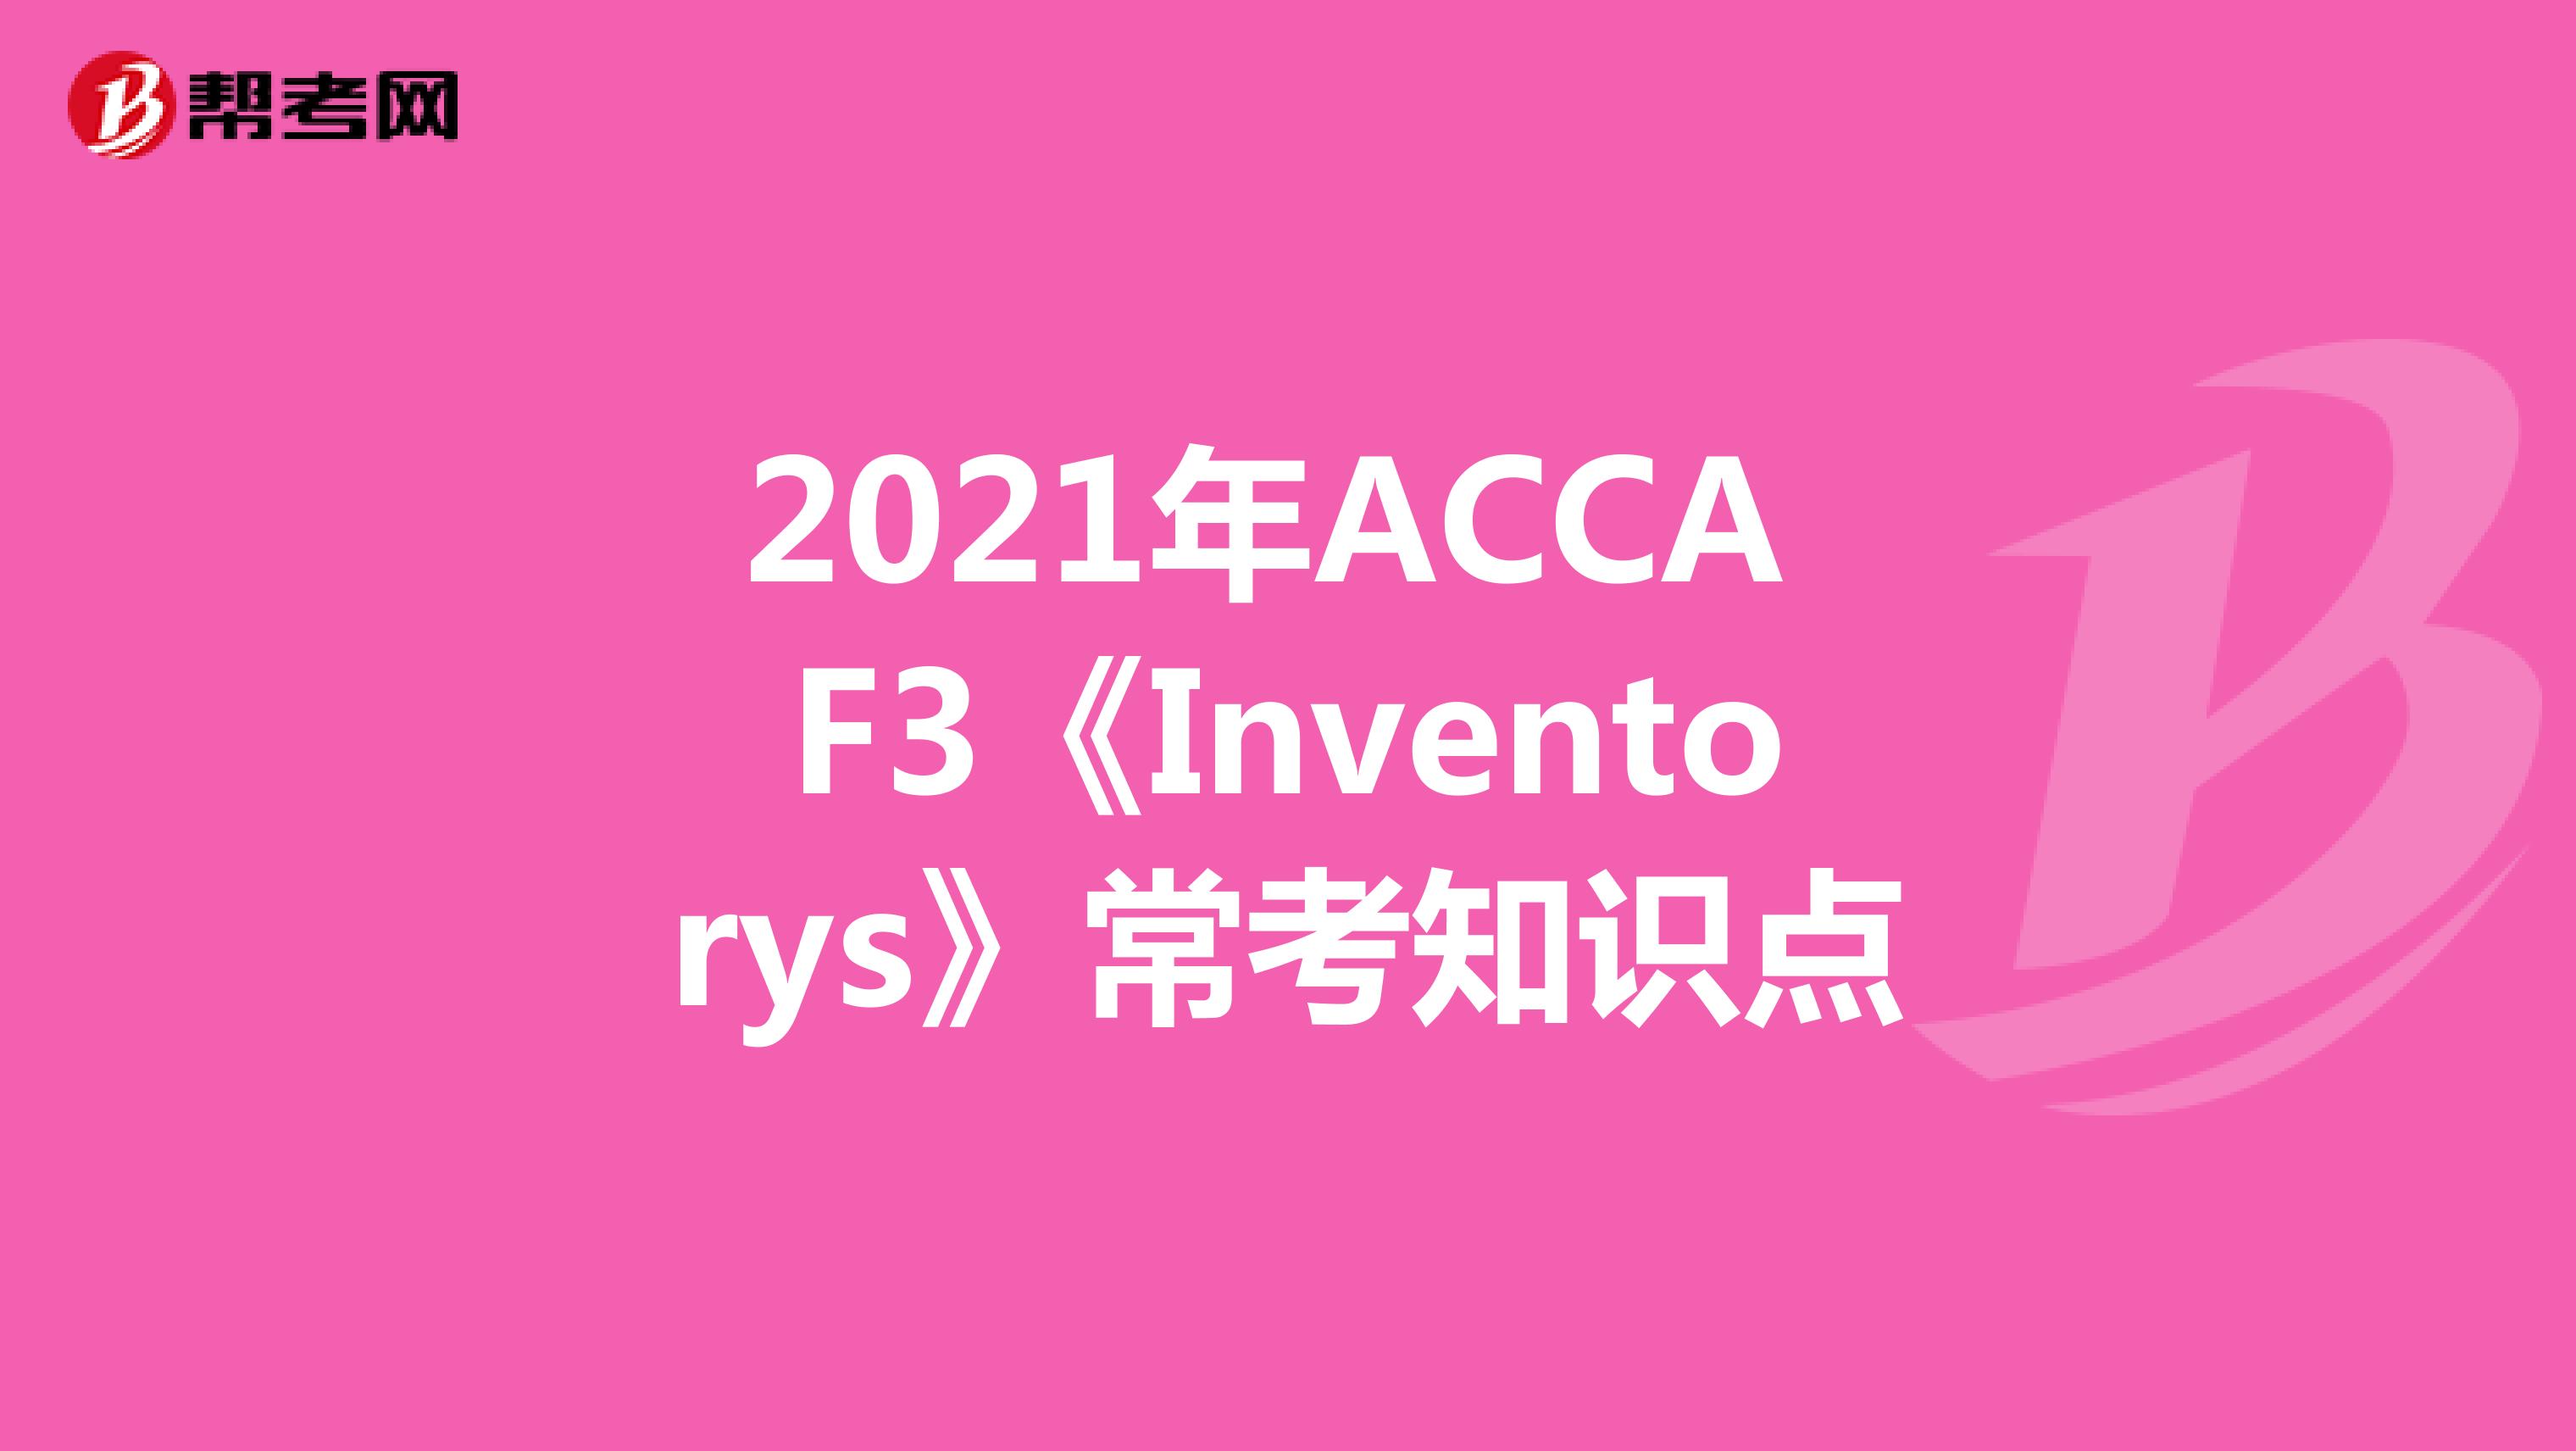 2021年ACCA F3《Inventorys》常考知识点